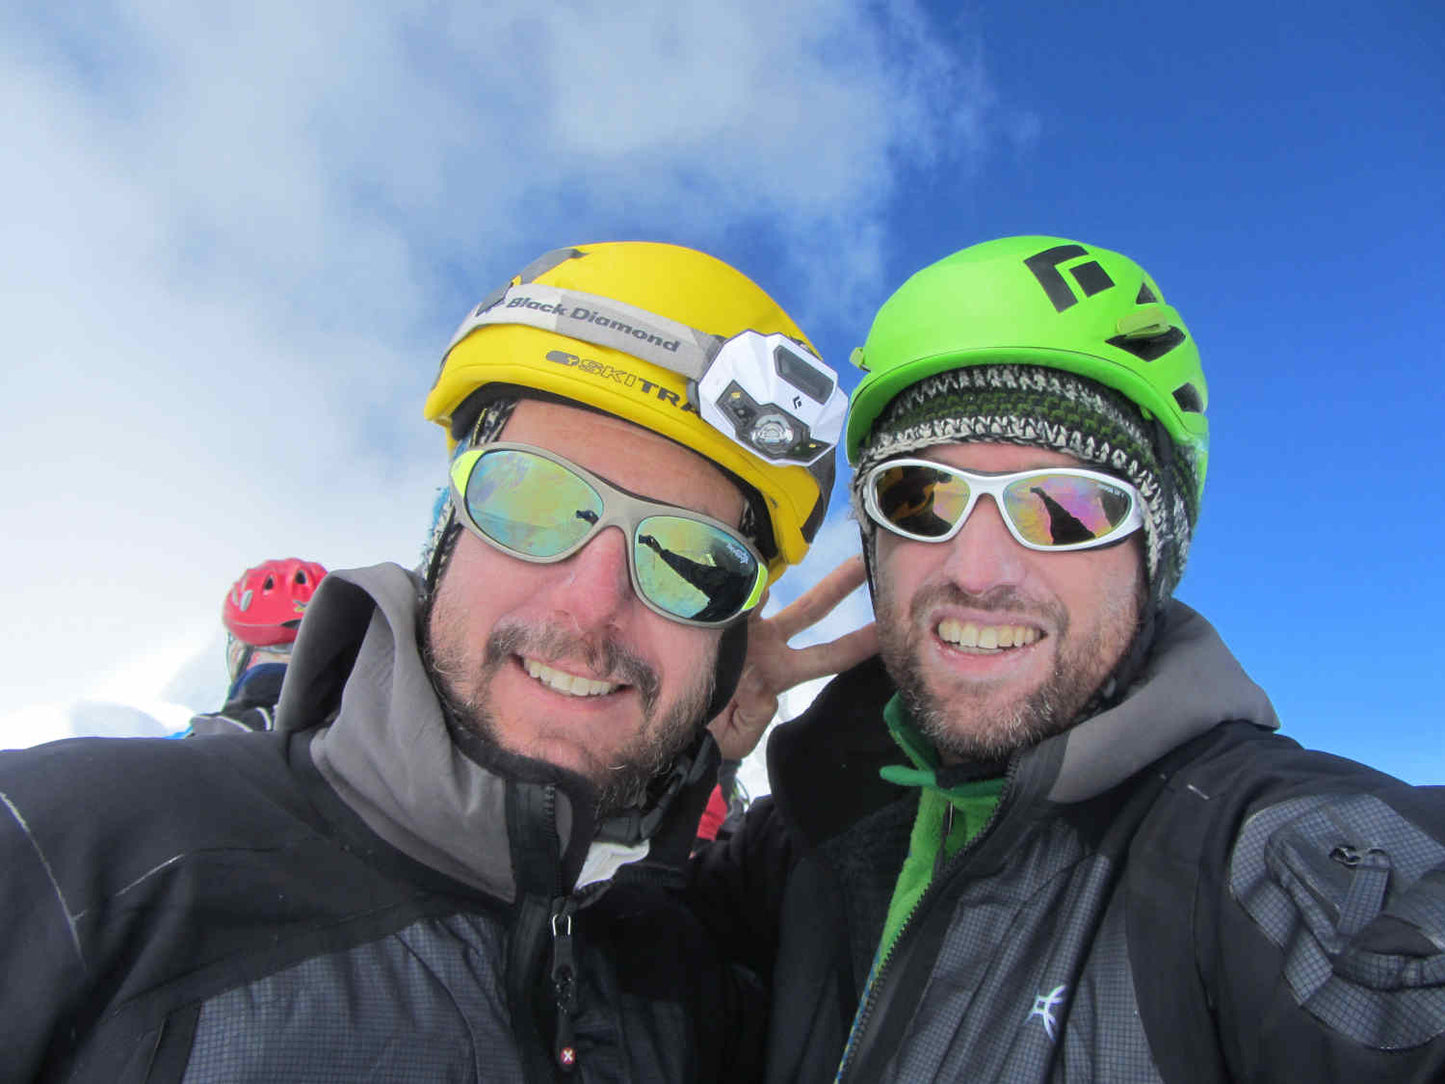 occhiale da alpinismo per ghiacciaio lenti categoria 4 specchiate modello MAKALU